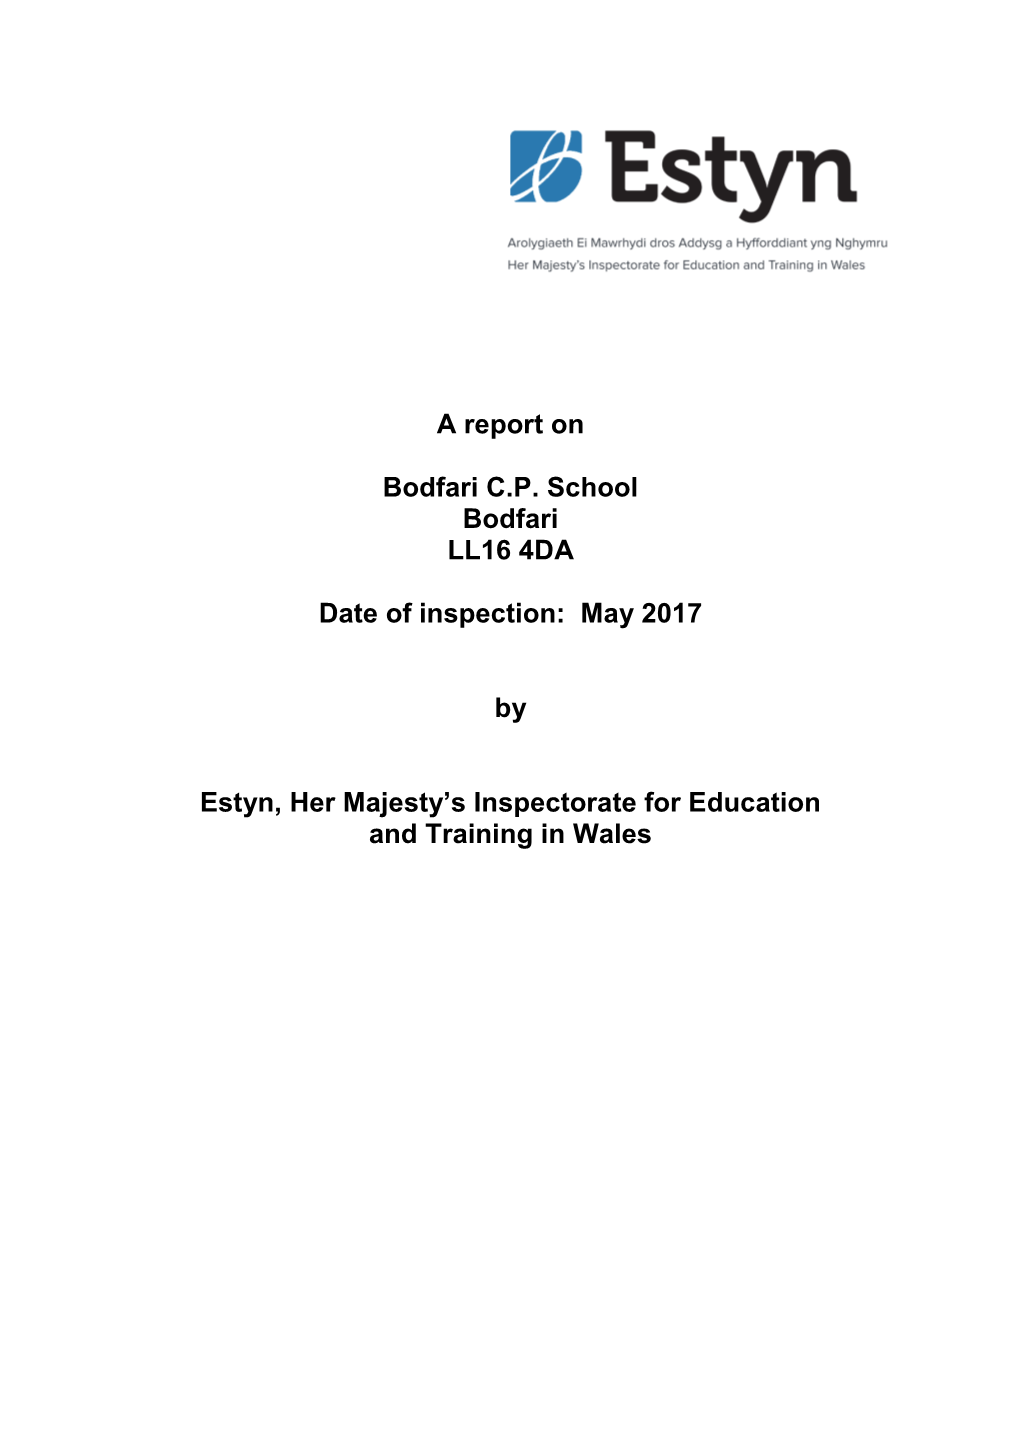 Inspection Report Bodfari C.P. School 2017